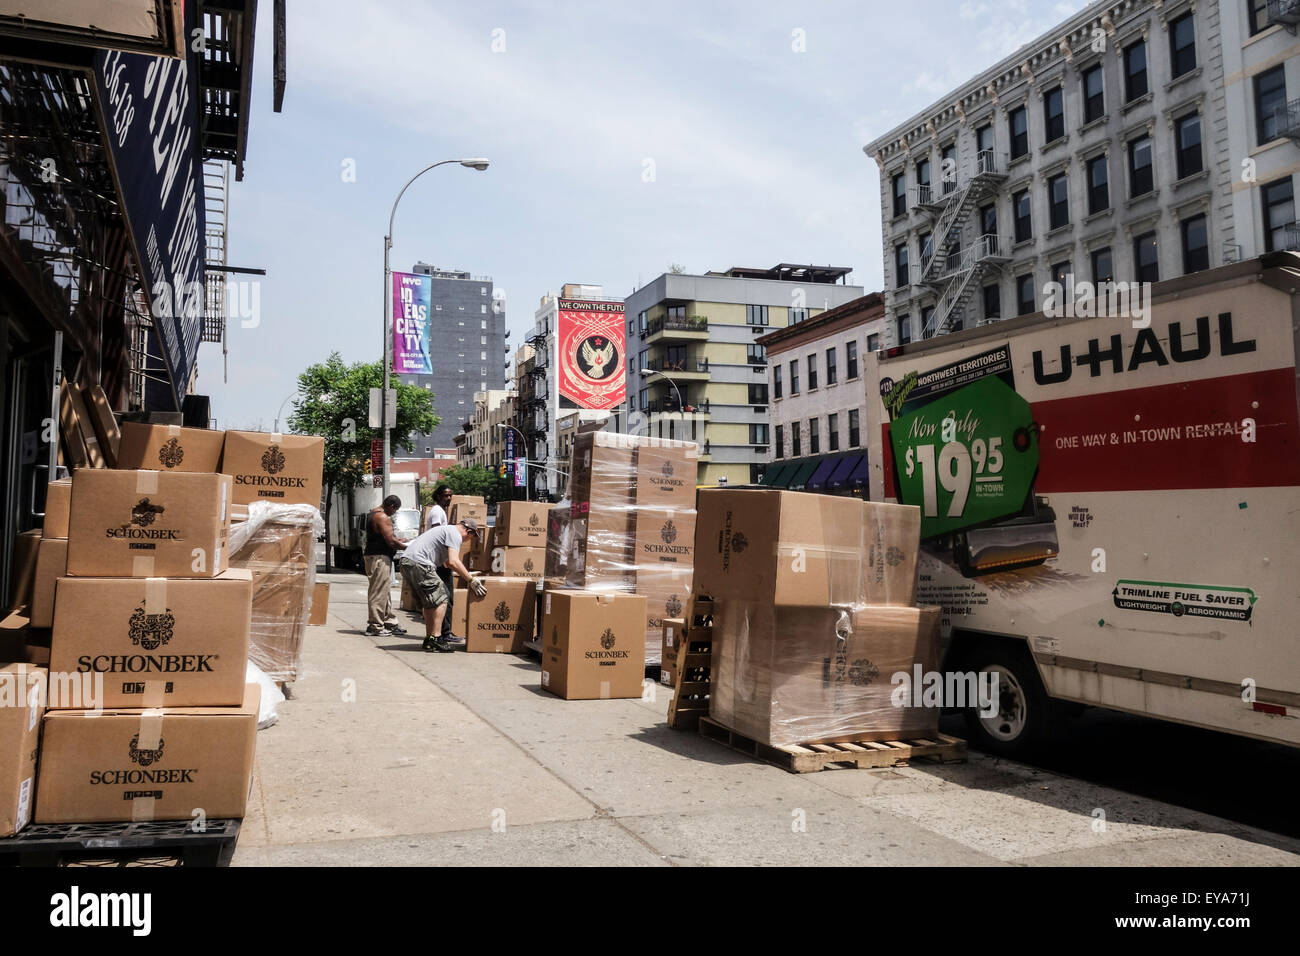 Delivery truck, workmen unloading merchandize, boxes on sidewalk, Bowery street, Chinatown, New York City, Manhattan, USA. Stock Photo